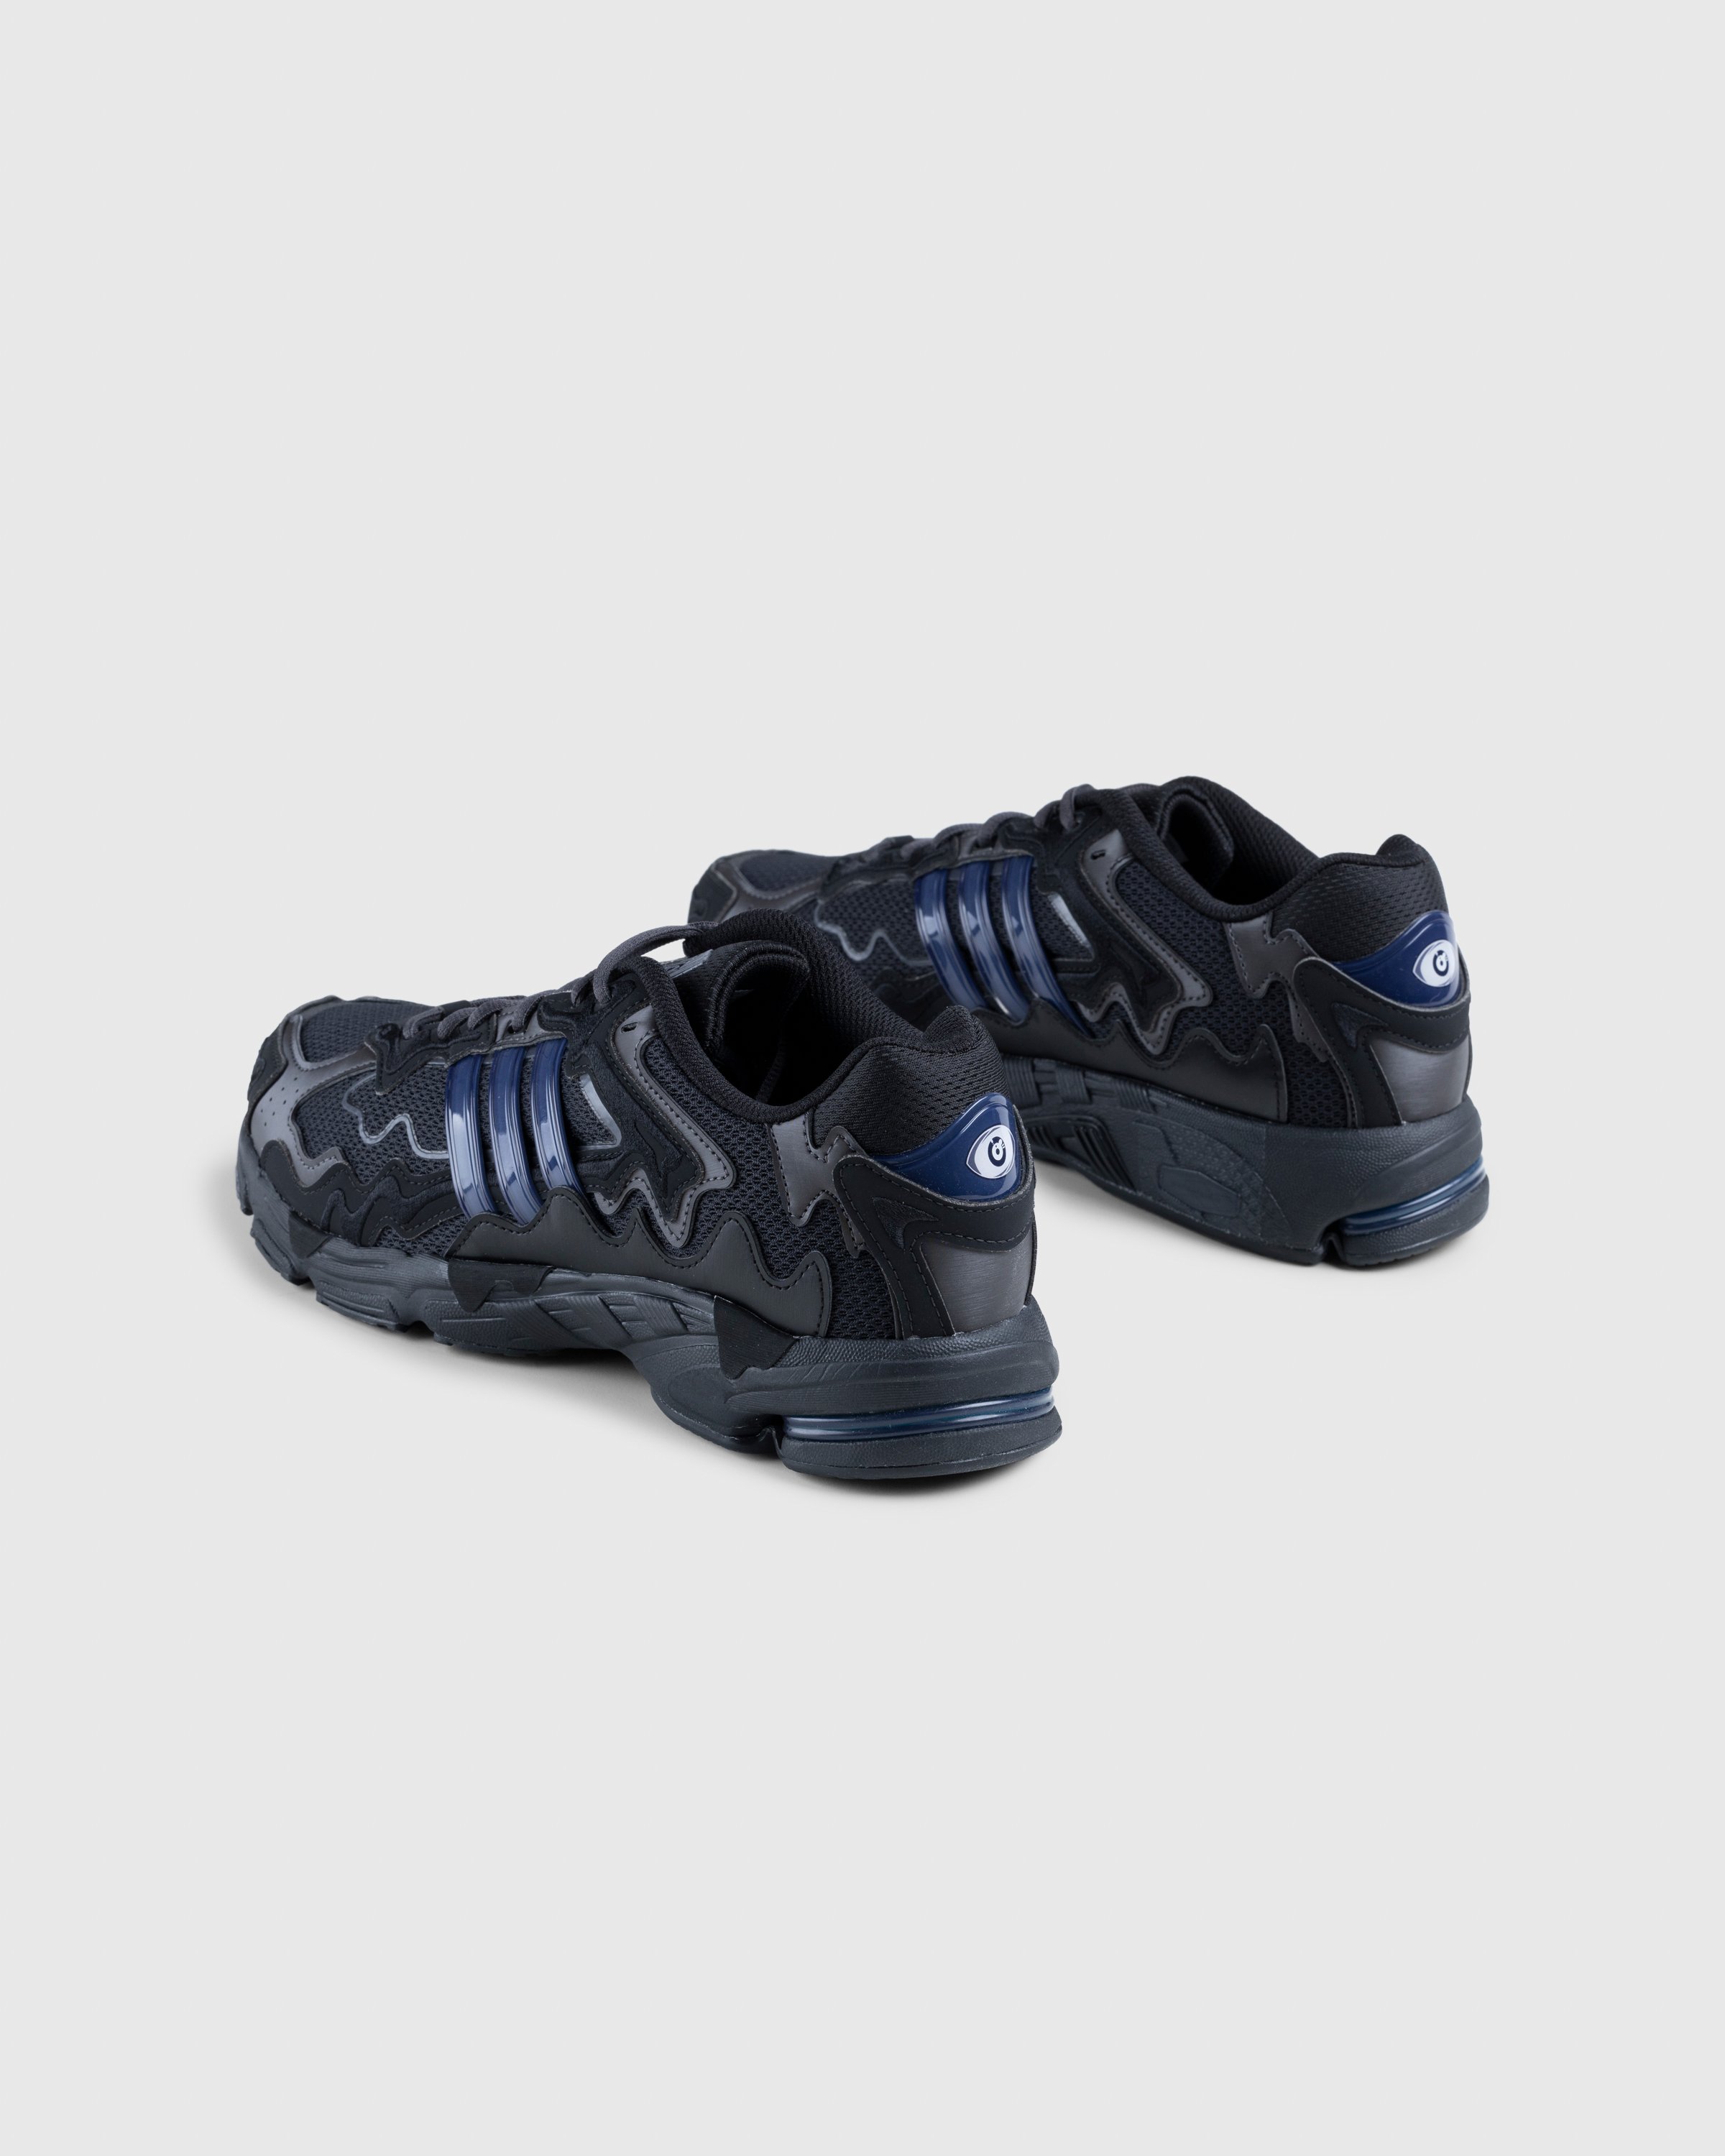 Adidas x Bad Bunny - Response Black - Footwear - Black - Image 4